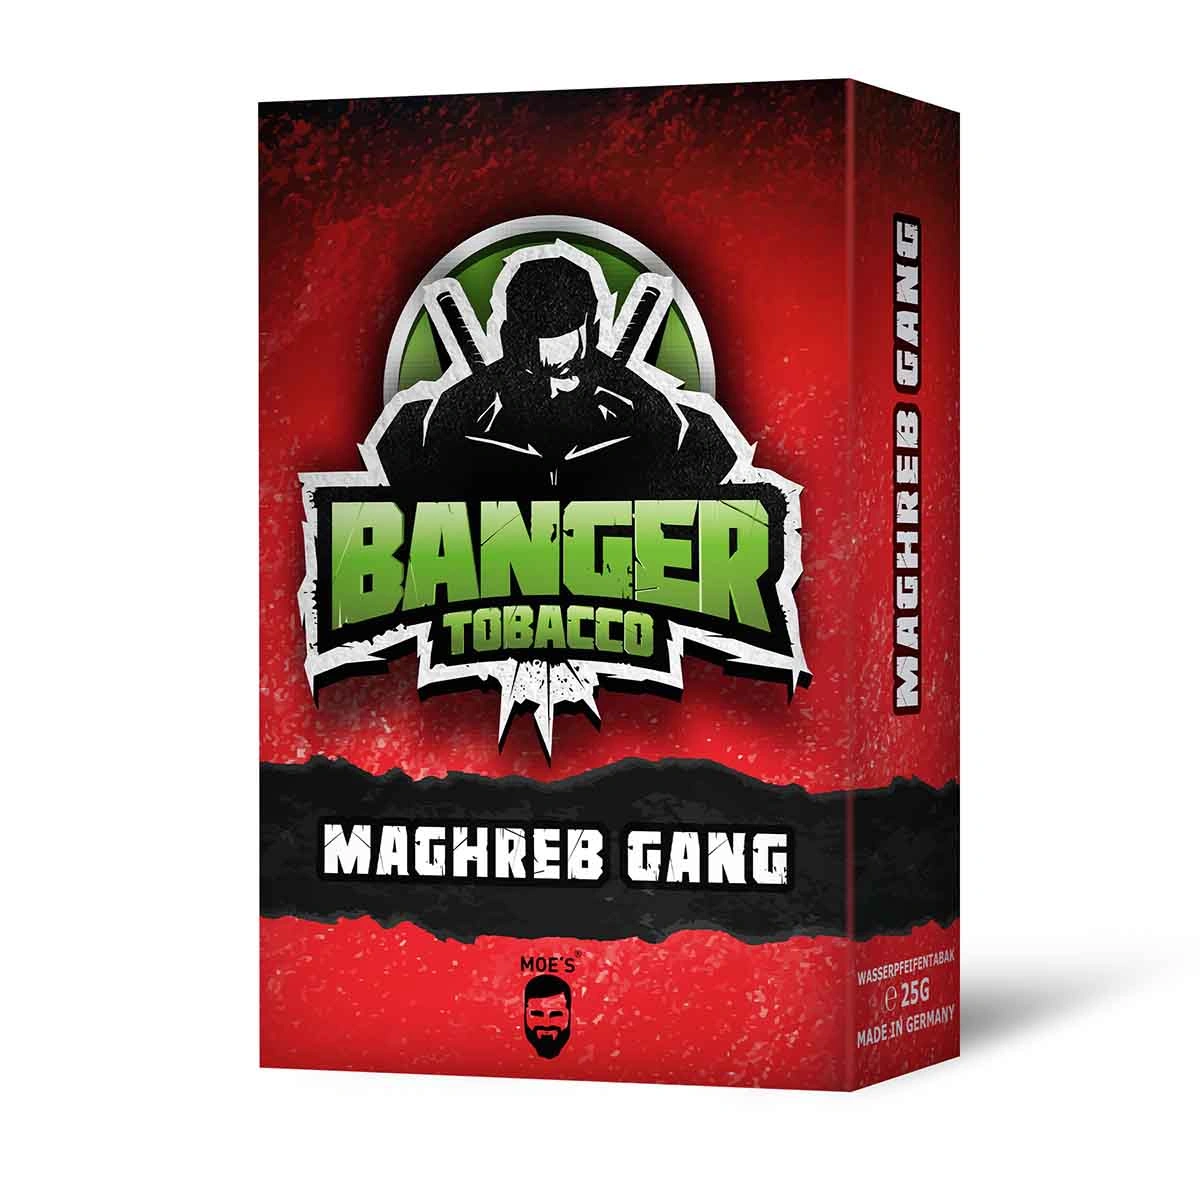 Maghreb Gang 25g | Banger